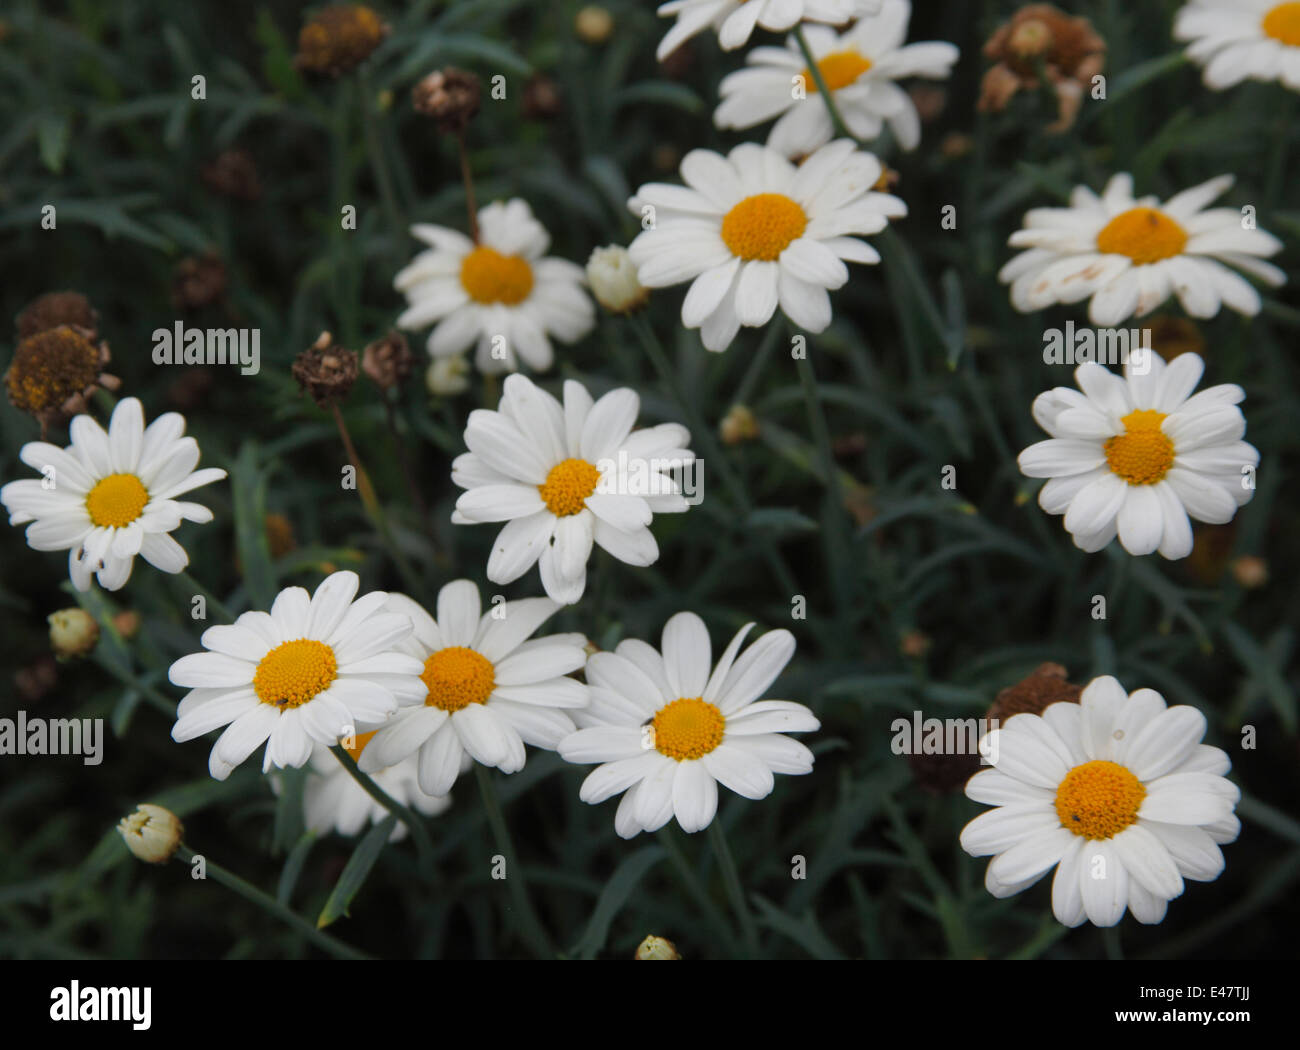 Agryanthemum frutescens 'Larita White Beauty' close up of flower Stock Photo